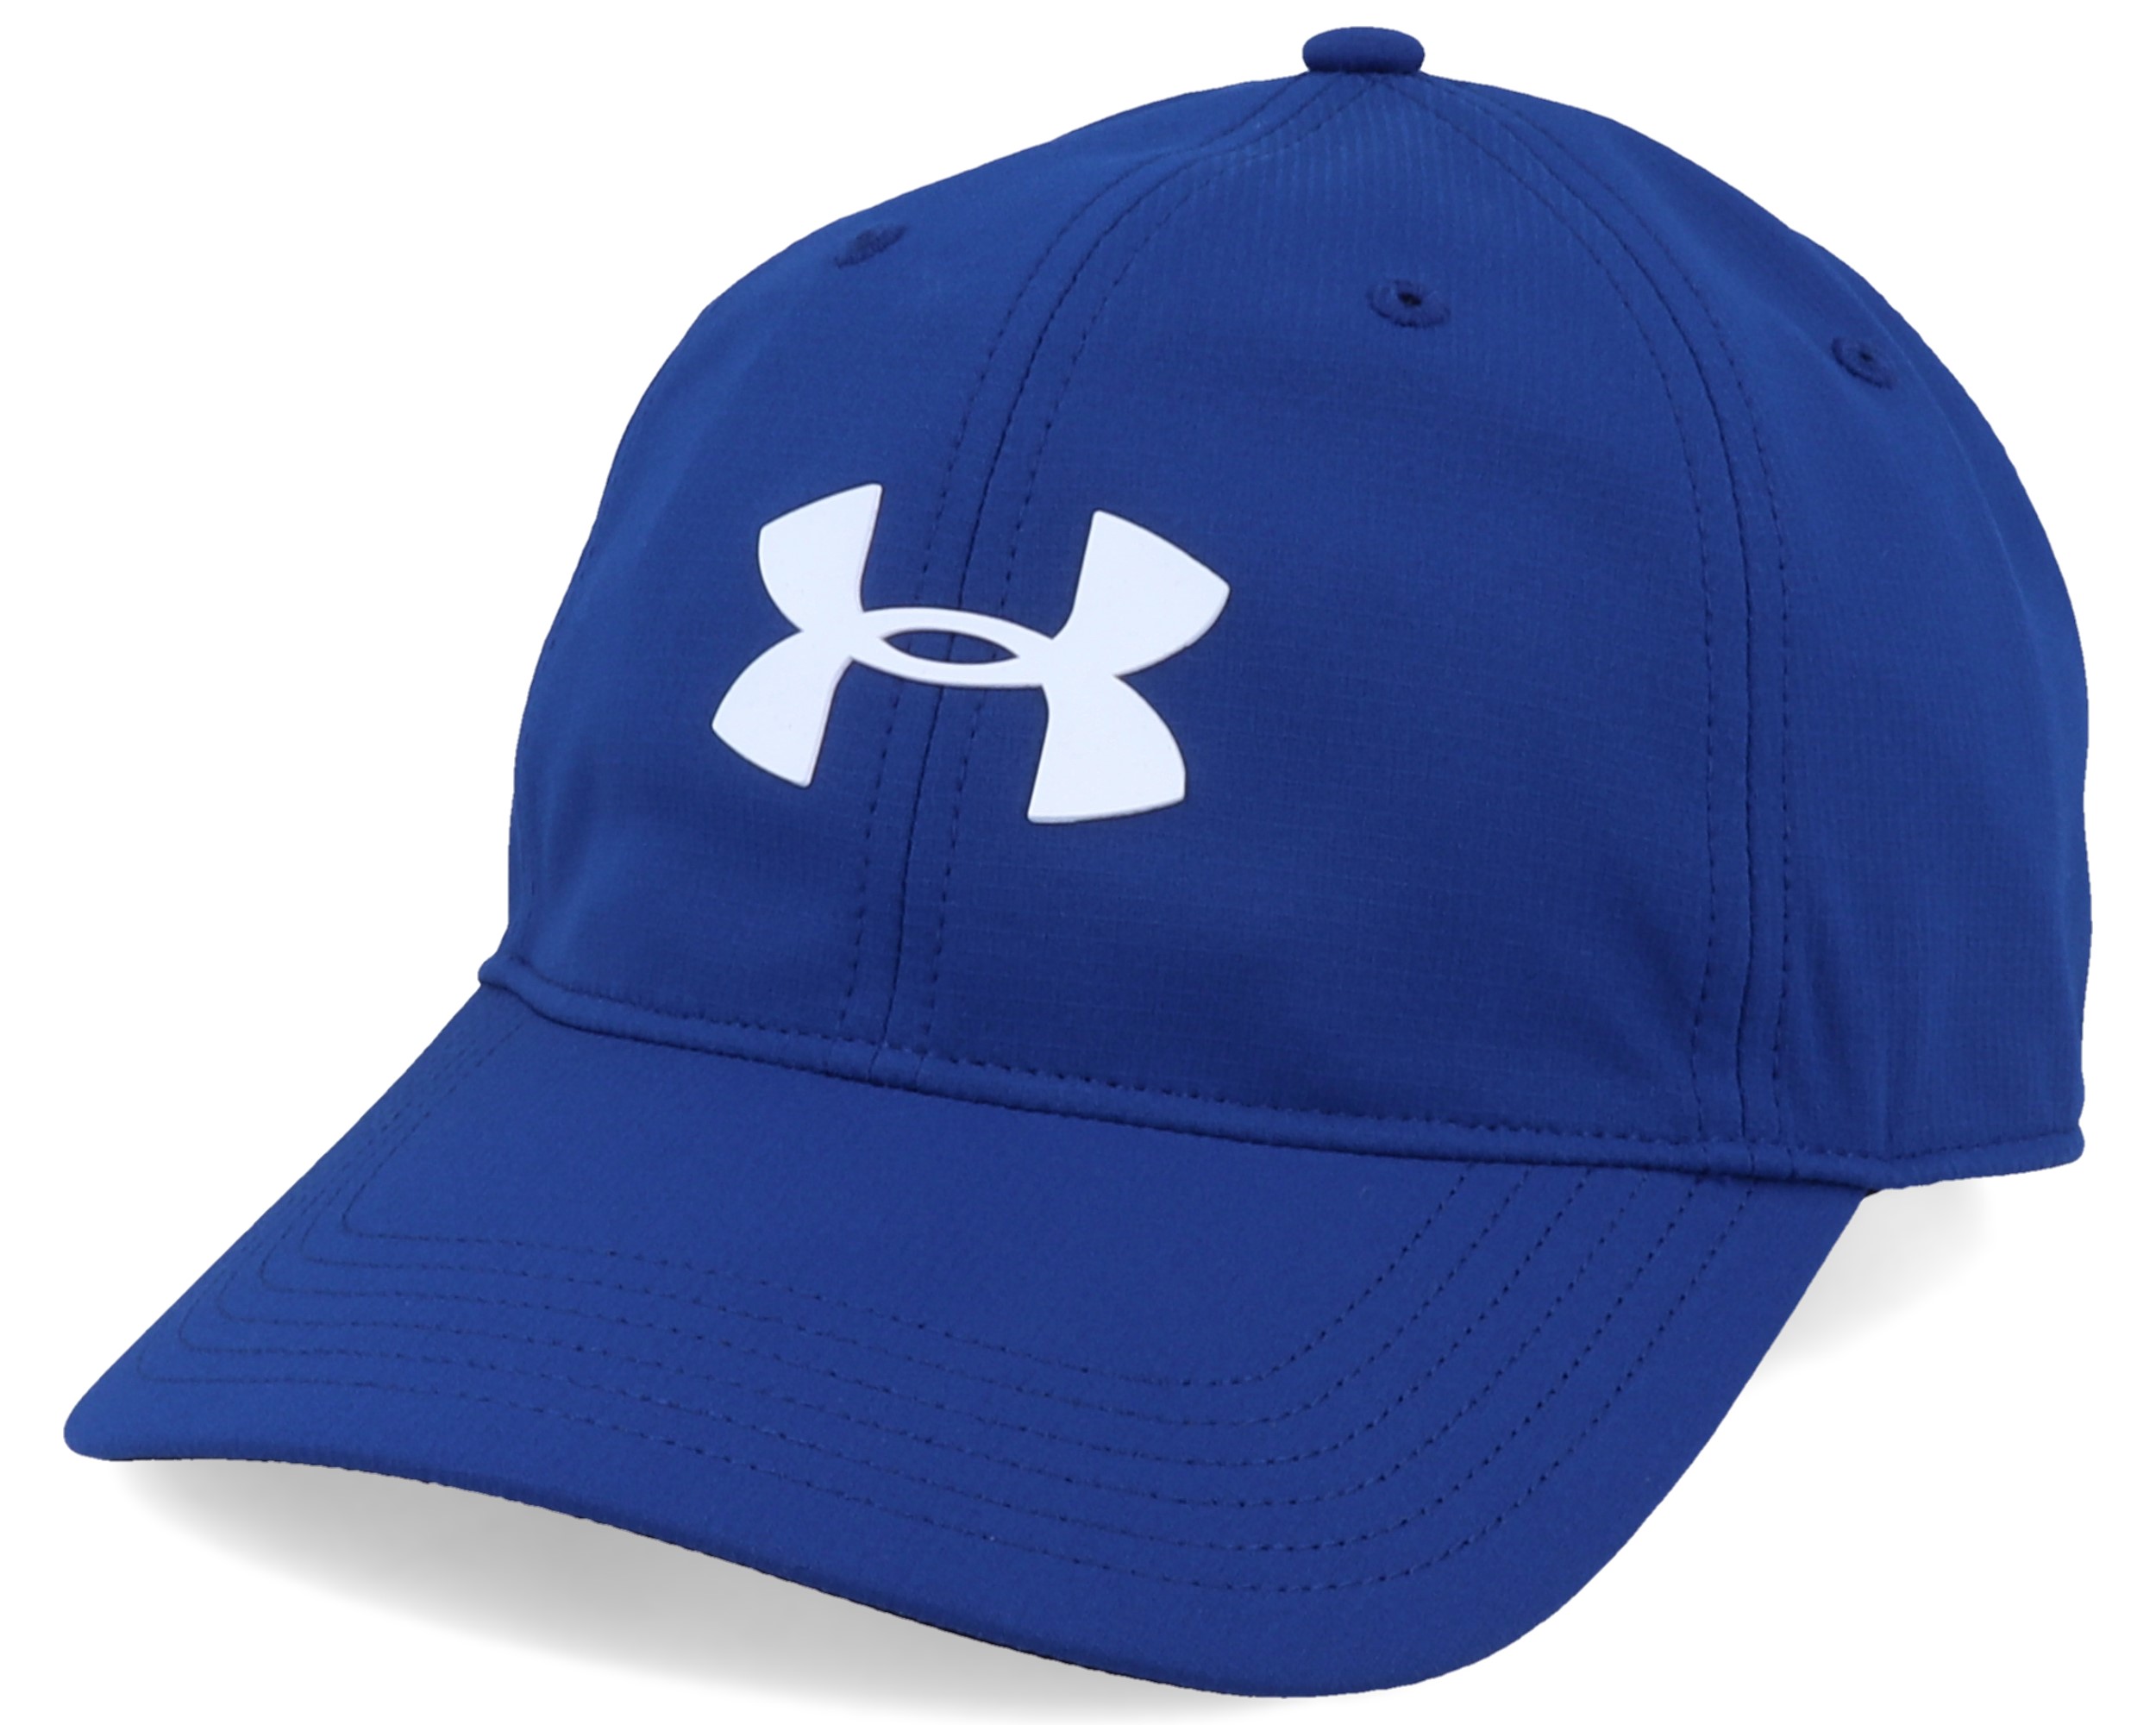 Baseline American Blue/White Adjustable - Under Armour cap